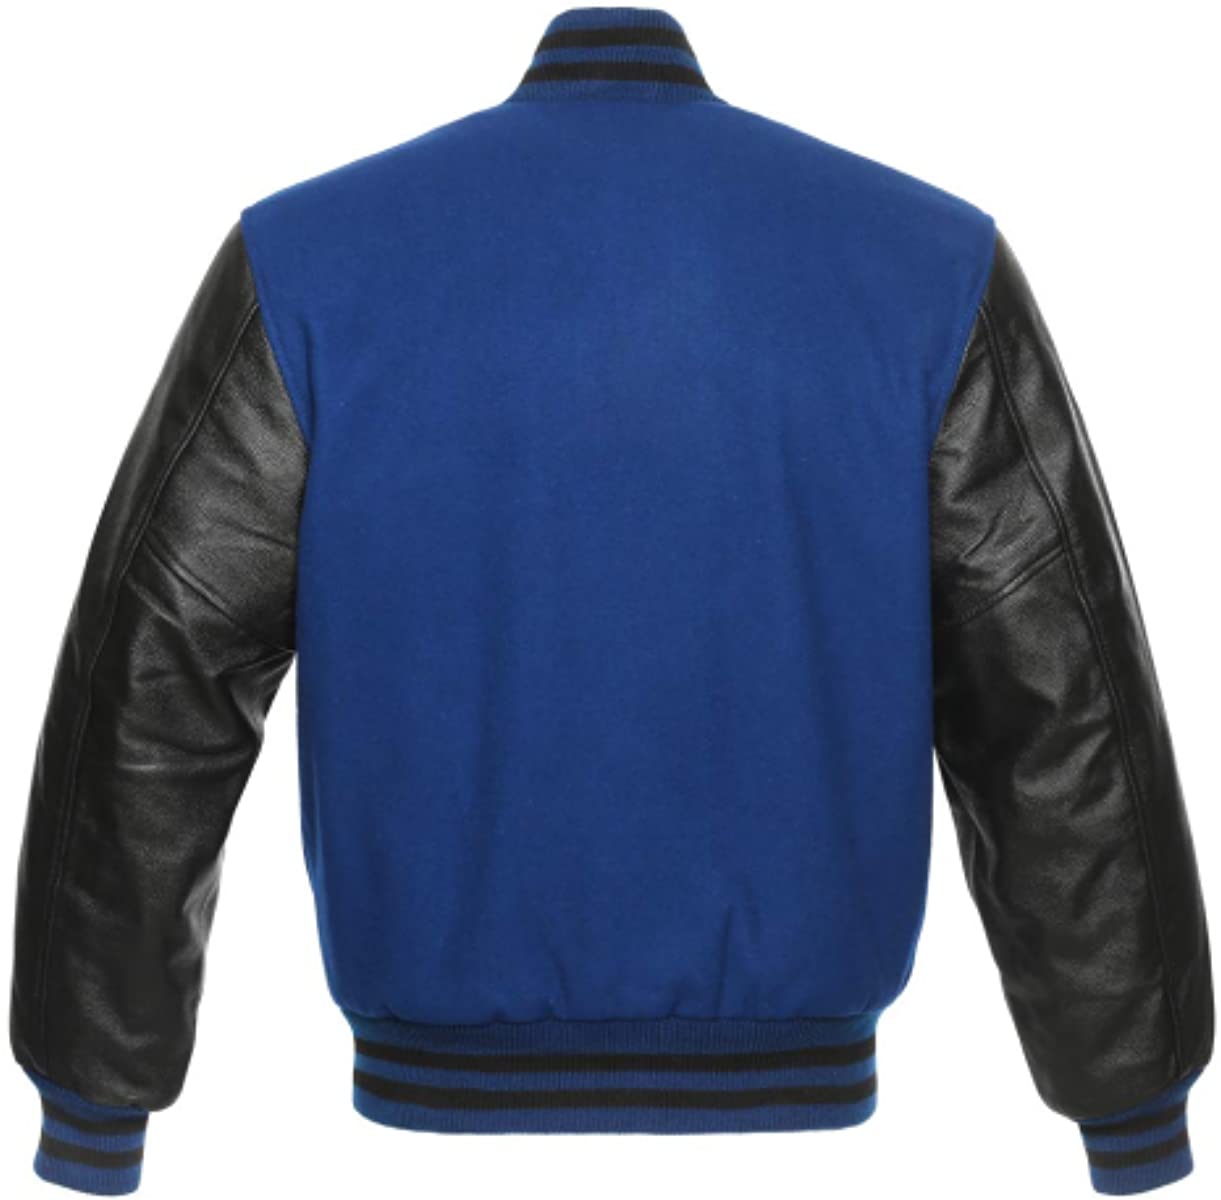 Maker of Jacket Men Jackets Athletics Black Blue Varsity Baseball Letterman